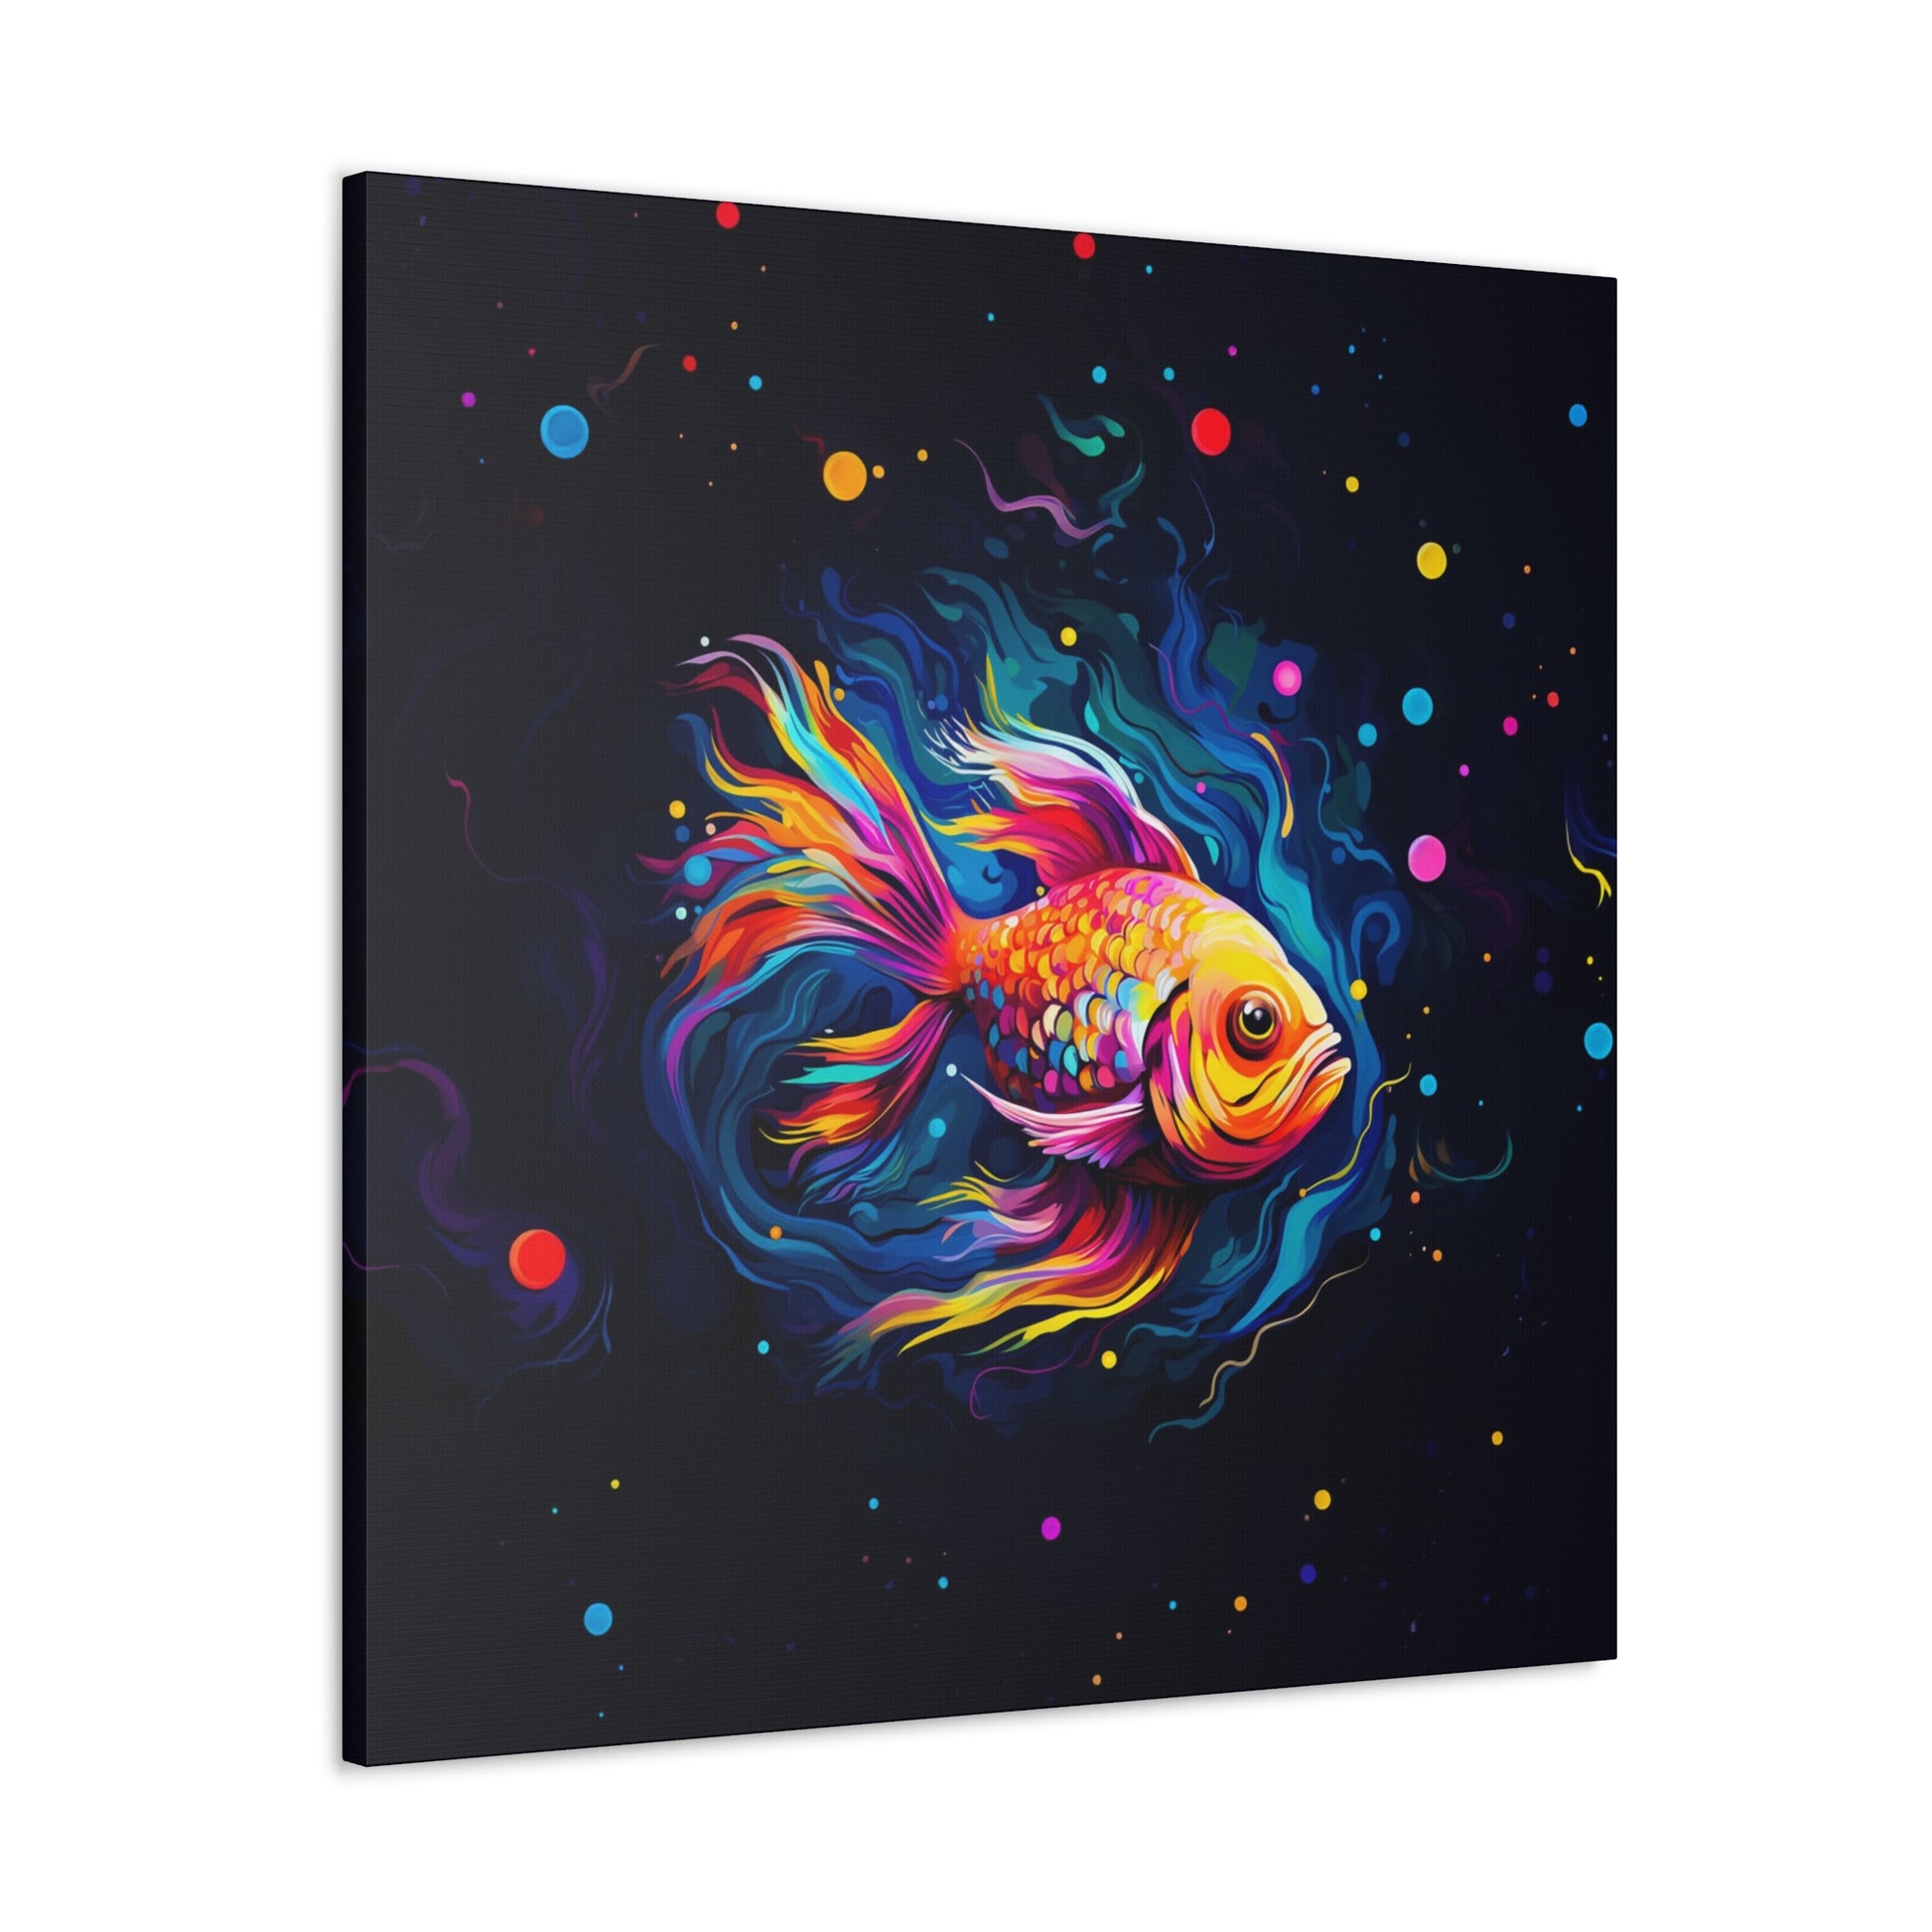 colorful tropical fish wall decor